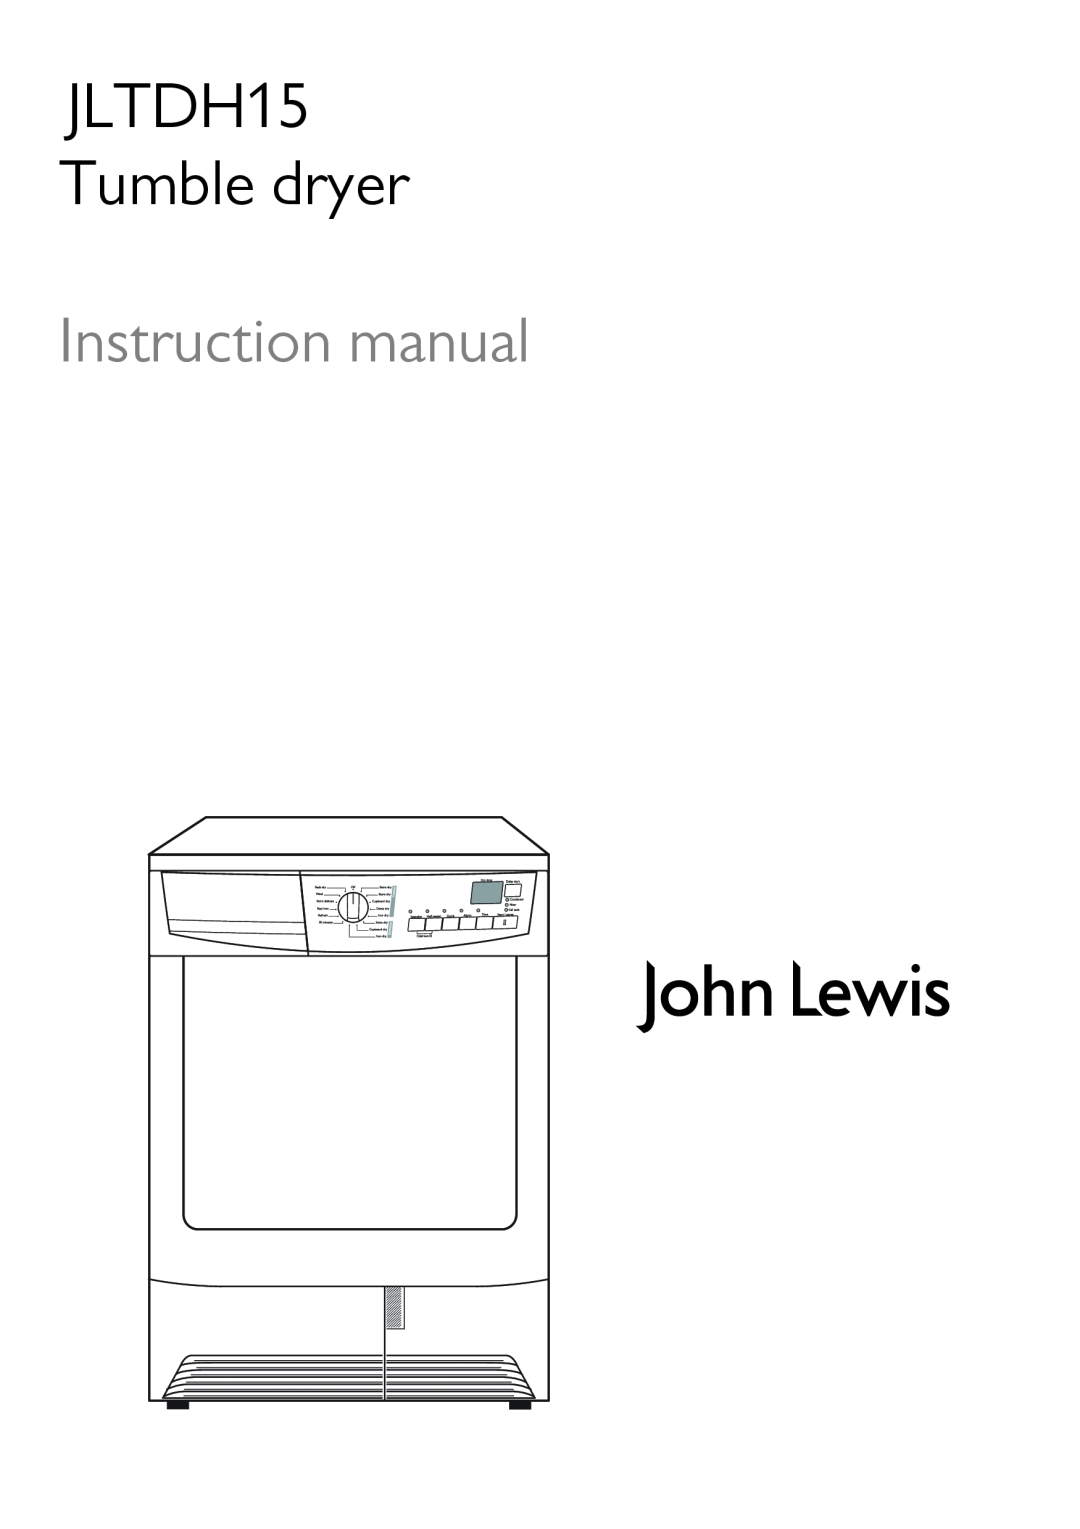 John Lewis JLTDH15 instruction manual Tumble dryer, Instruction manual 